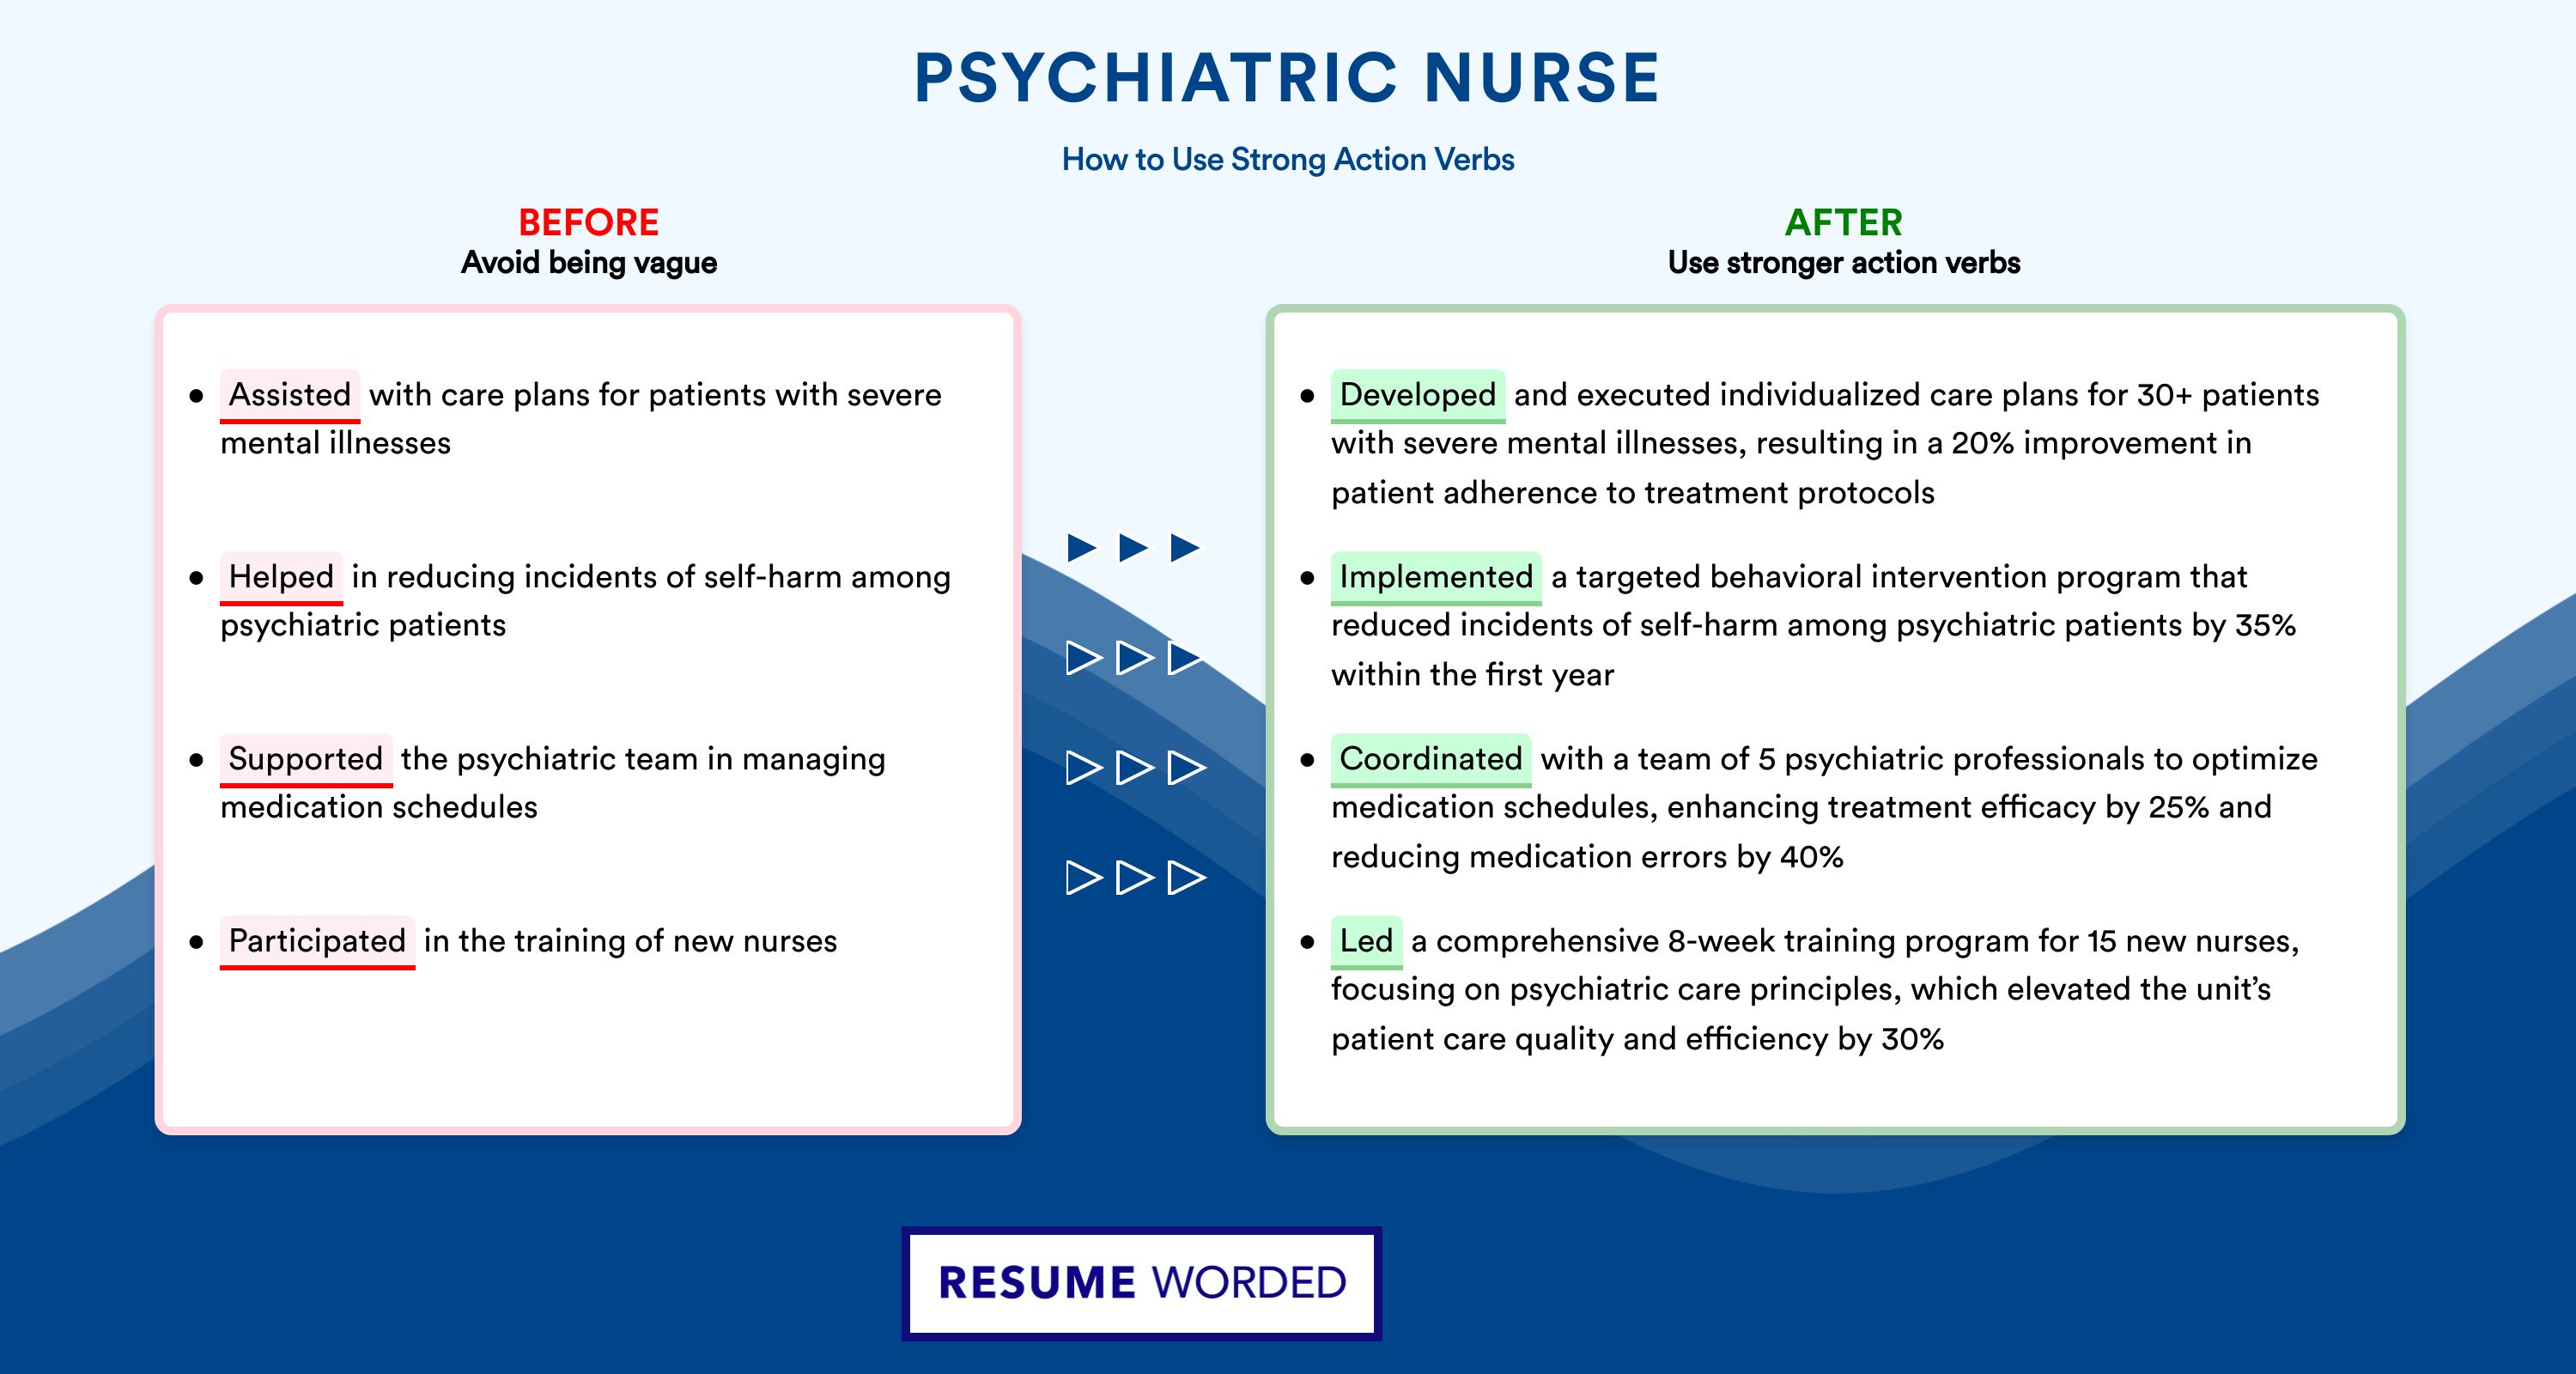 Action Verbs for Psychiatric Nurse